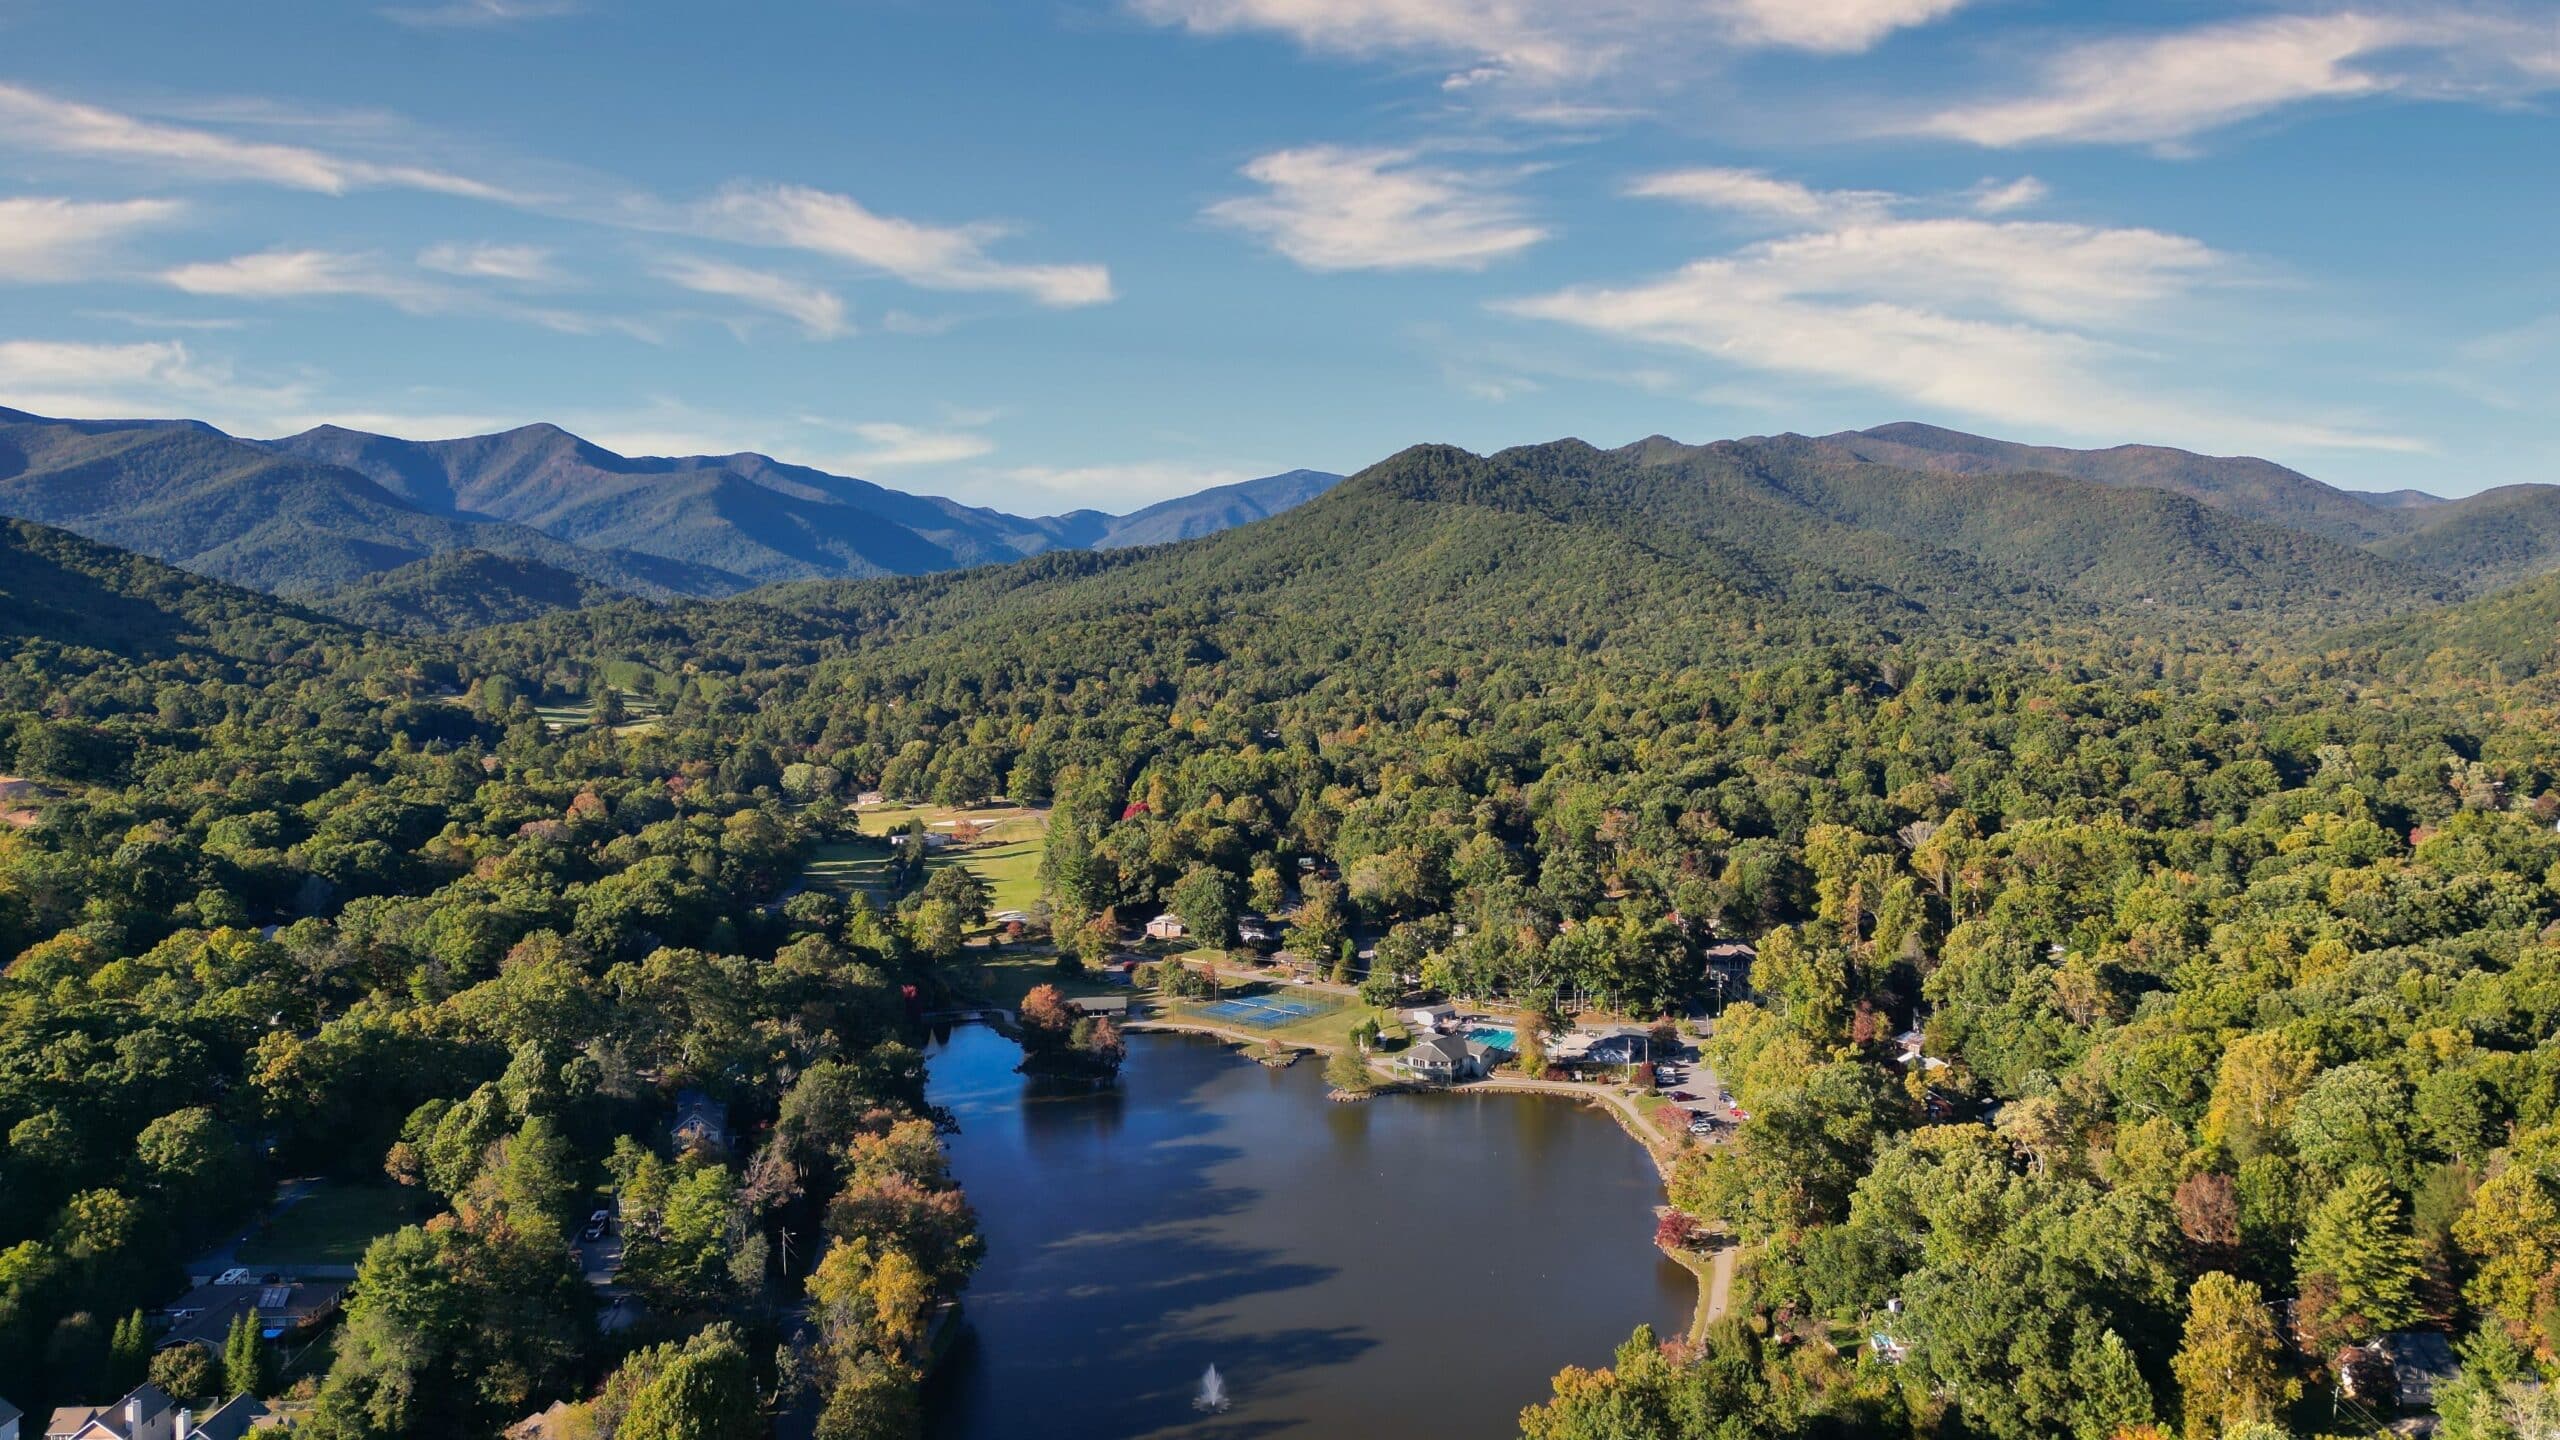 View of a lake in the Blue Ridge Mountain area of North Carolina